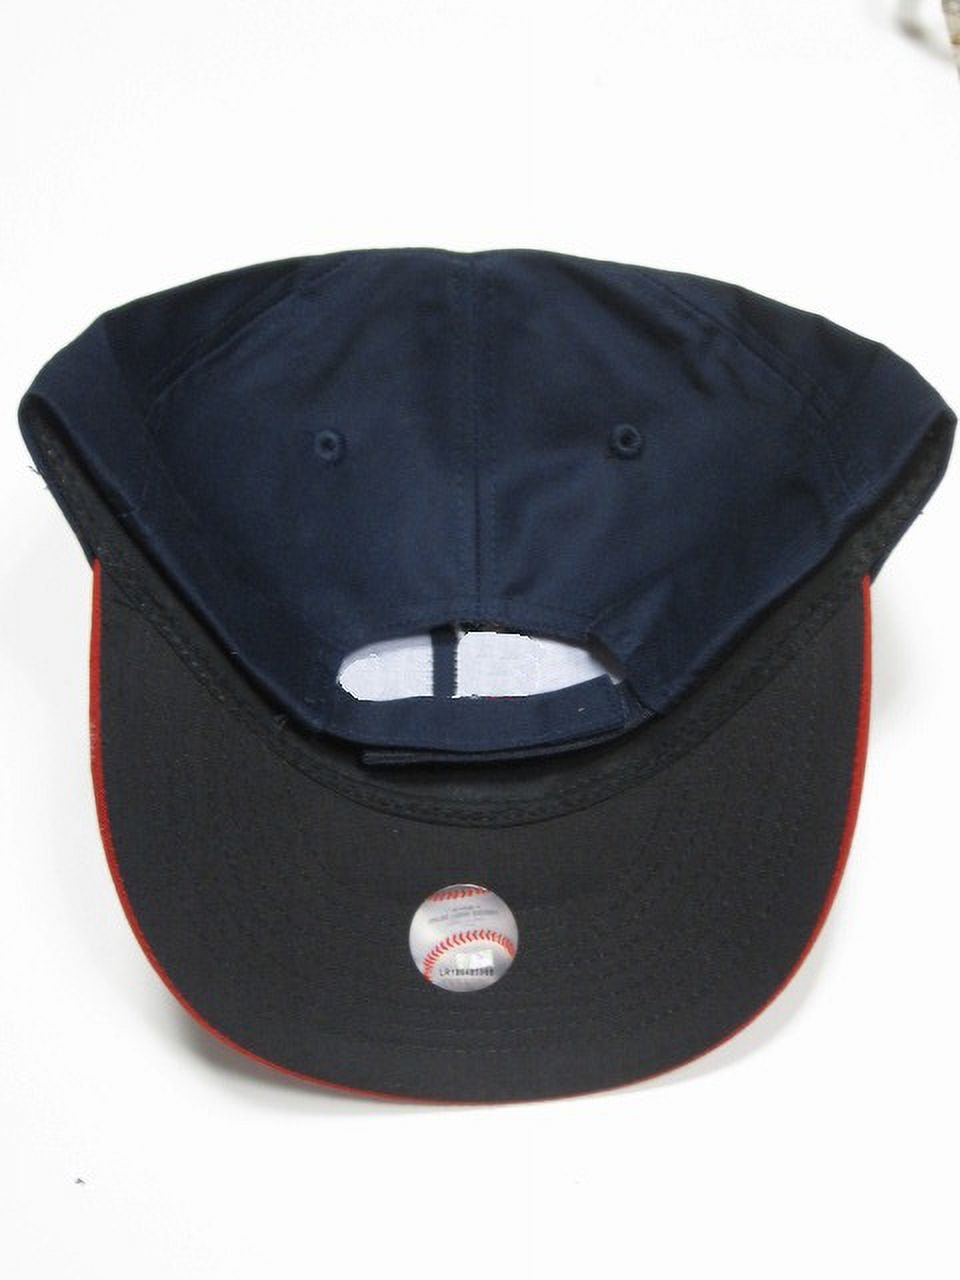 St LOUIS Cardinal MLB Adjustable Youth Baseball Cap Hat Red OC SPORTS Brand